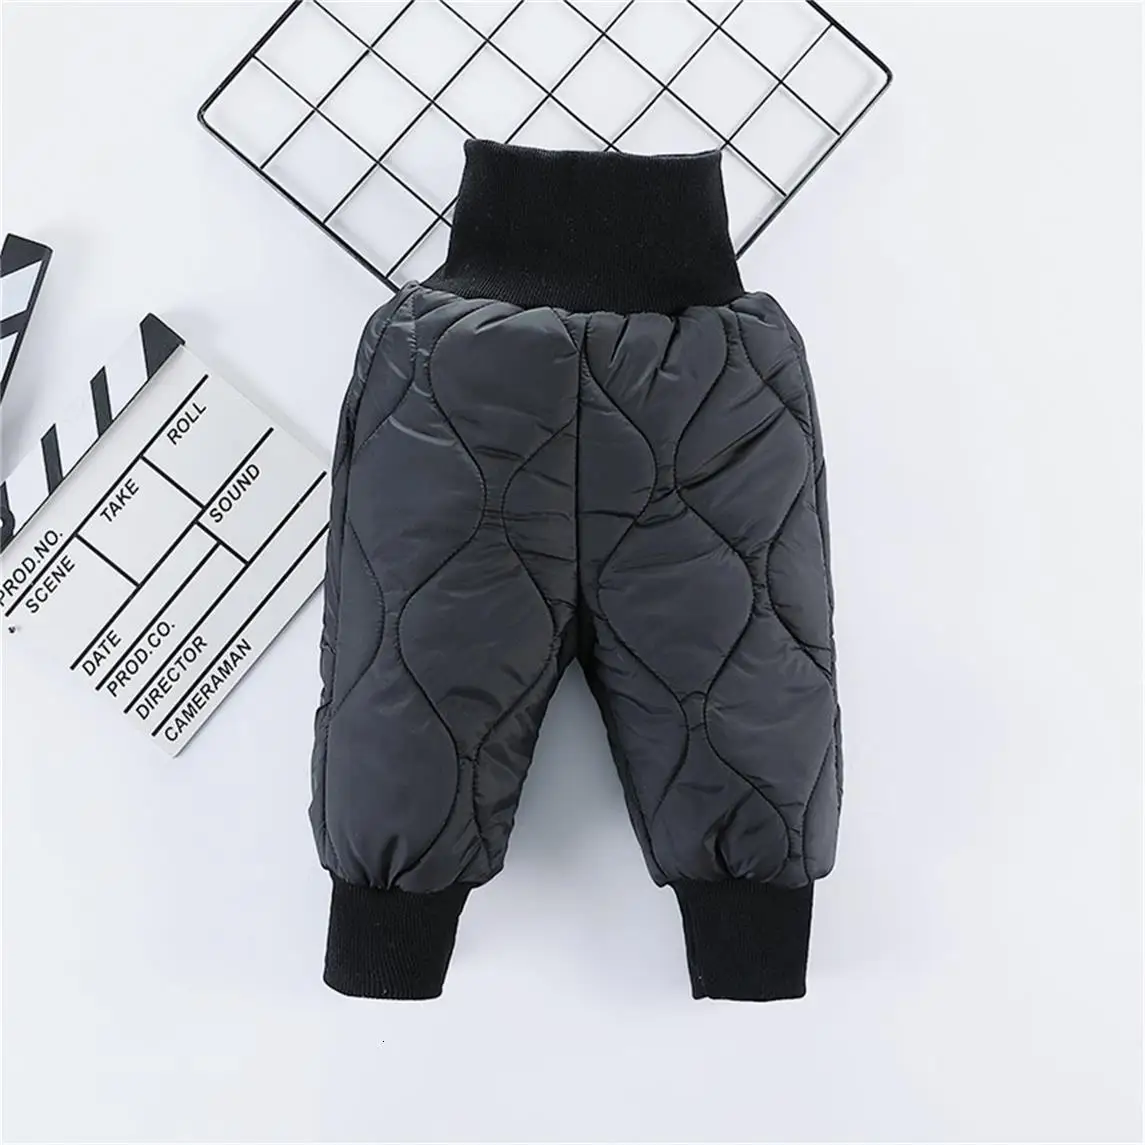 Children Winter Pants Warm Plus Velvet Thicken Boys Girls Sports Pants Toddler Cotton Trousers Fit For 9M-4T - Цвет: black